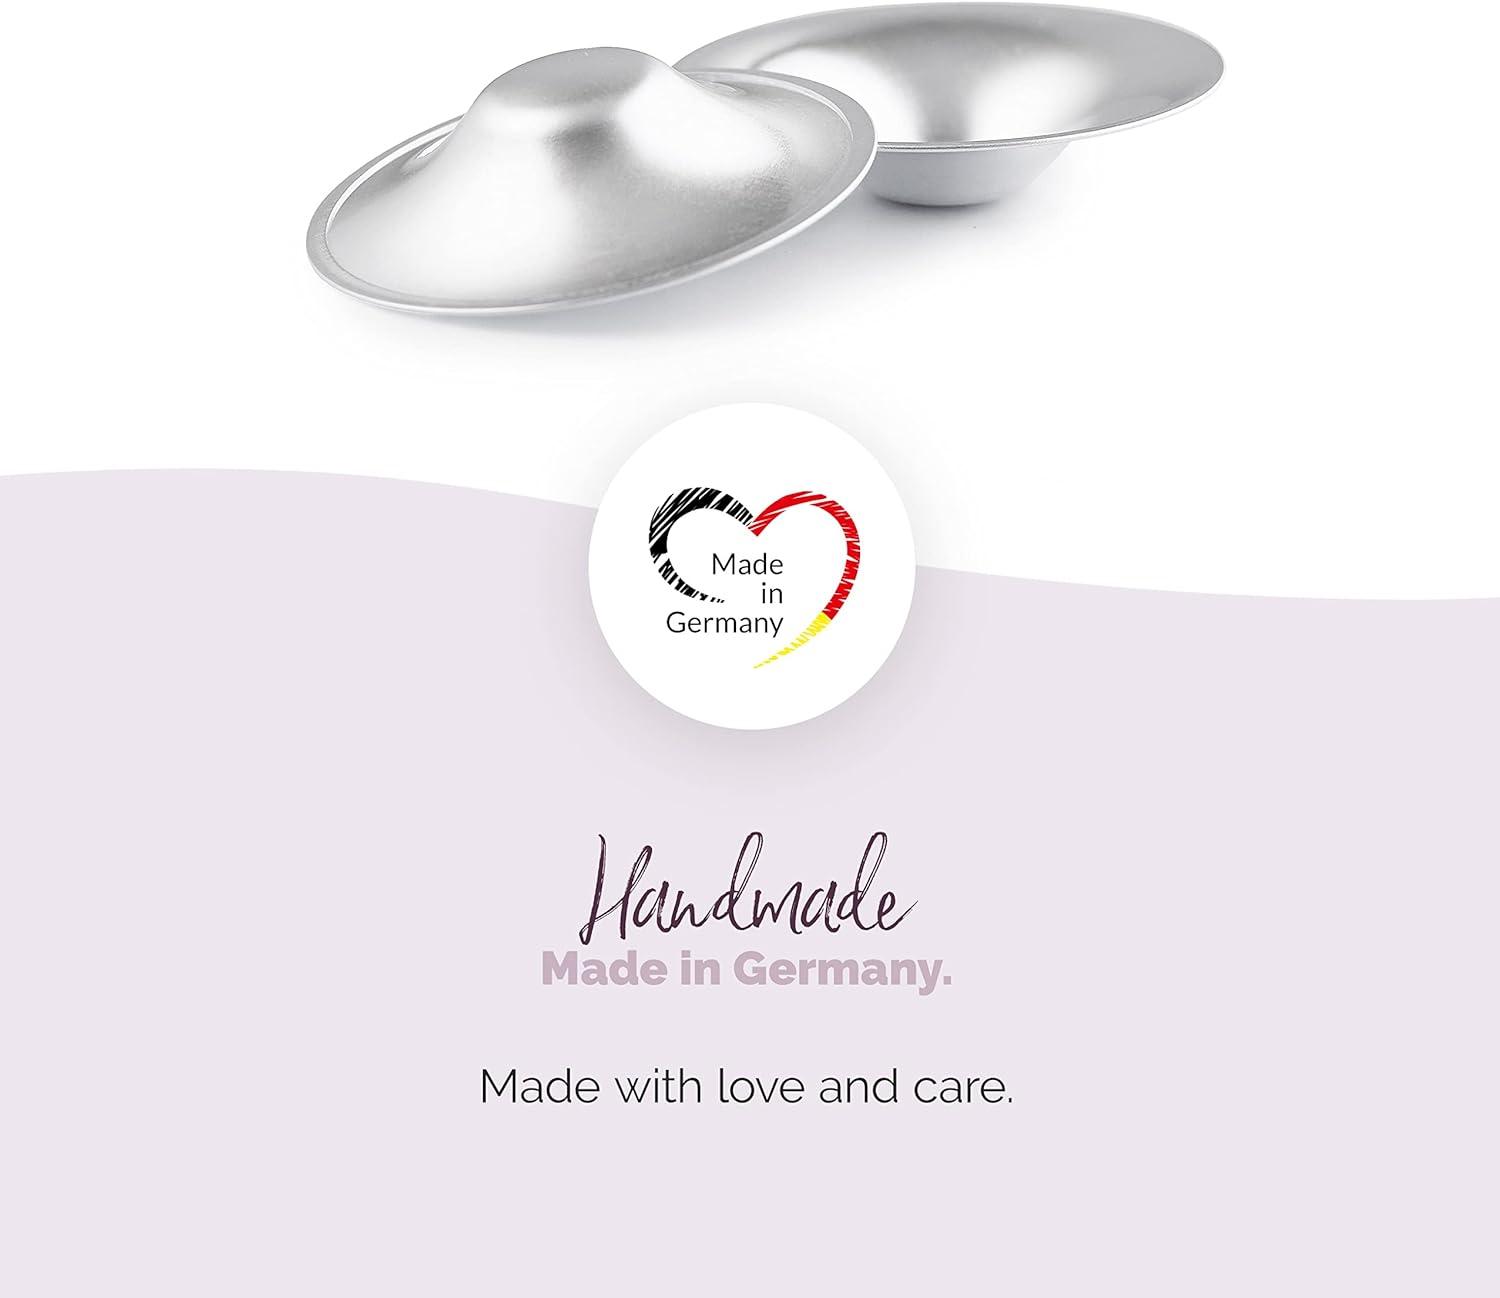 Silver Nipple Cups  Breastfeeding & Postpartum Care NZ